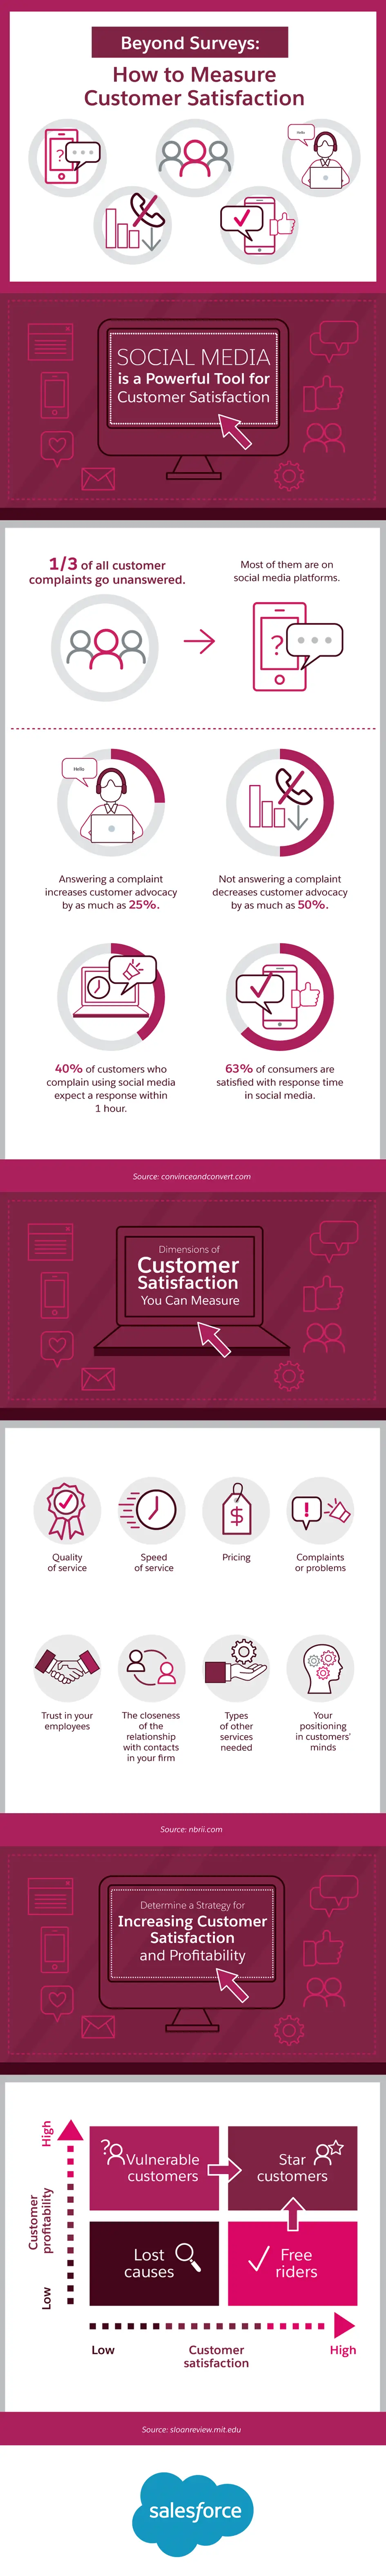 Measuring Customer Satisfaction Without Surveys